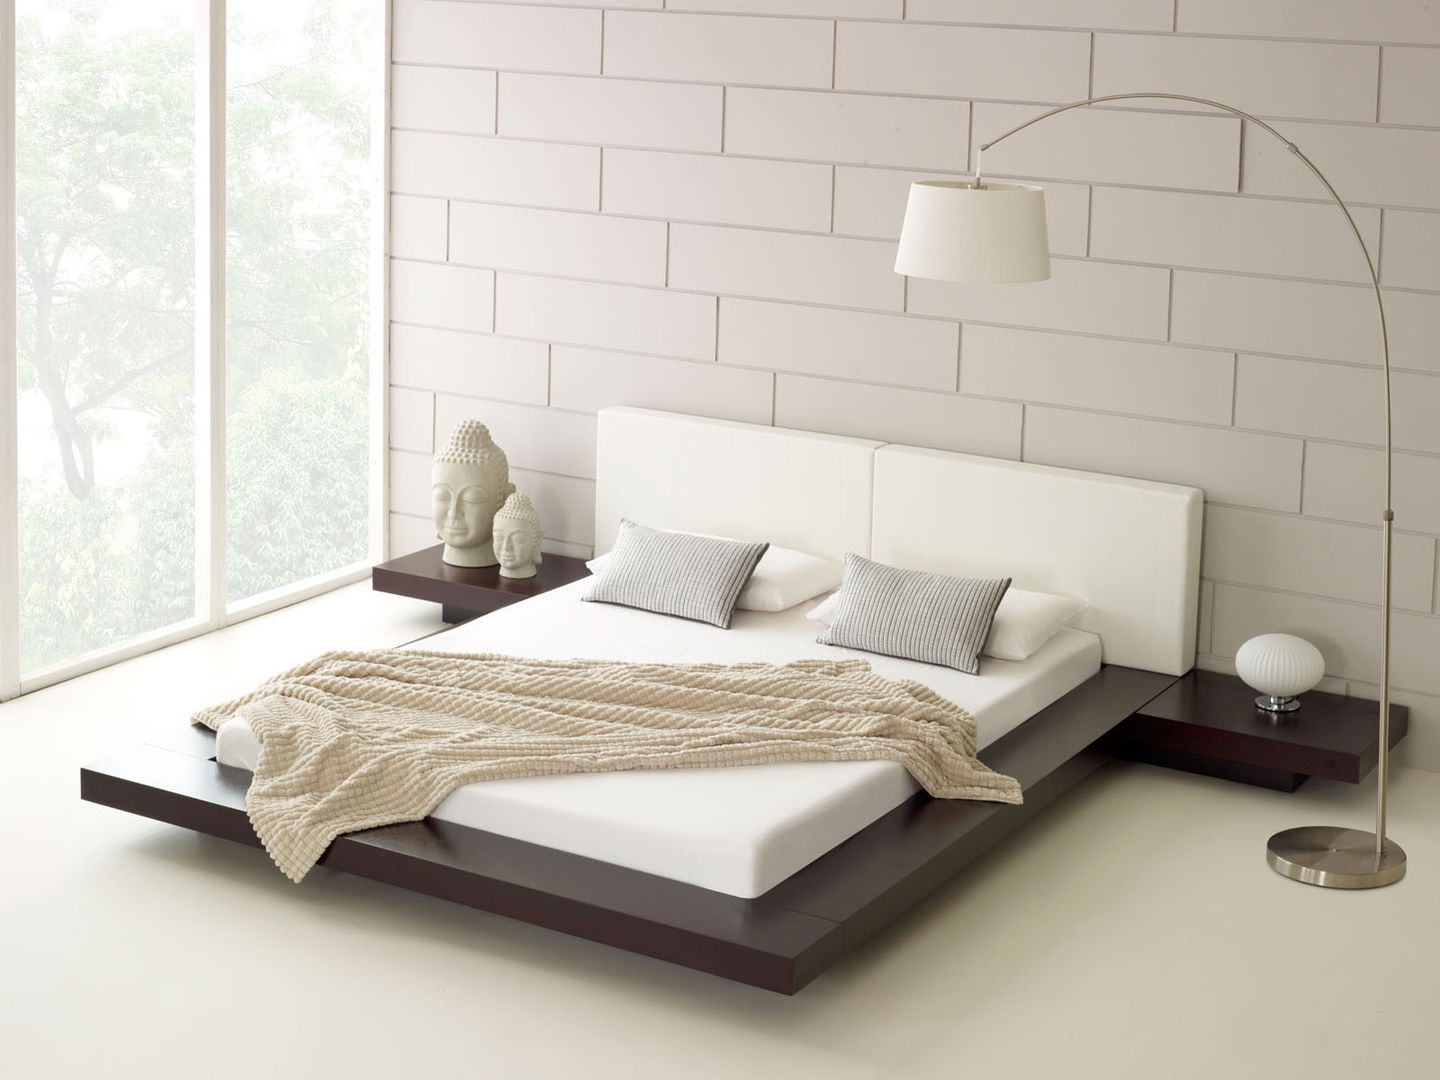 Harmonia Walnut Bed homify Modern style bedroom Beds & headboards